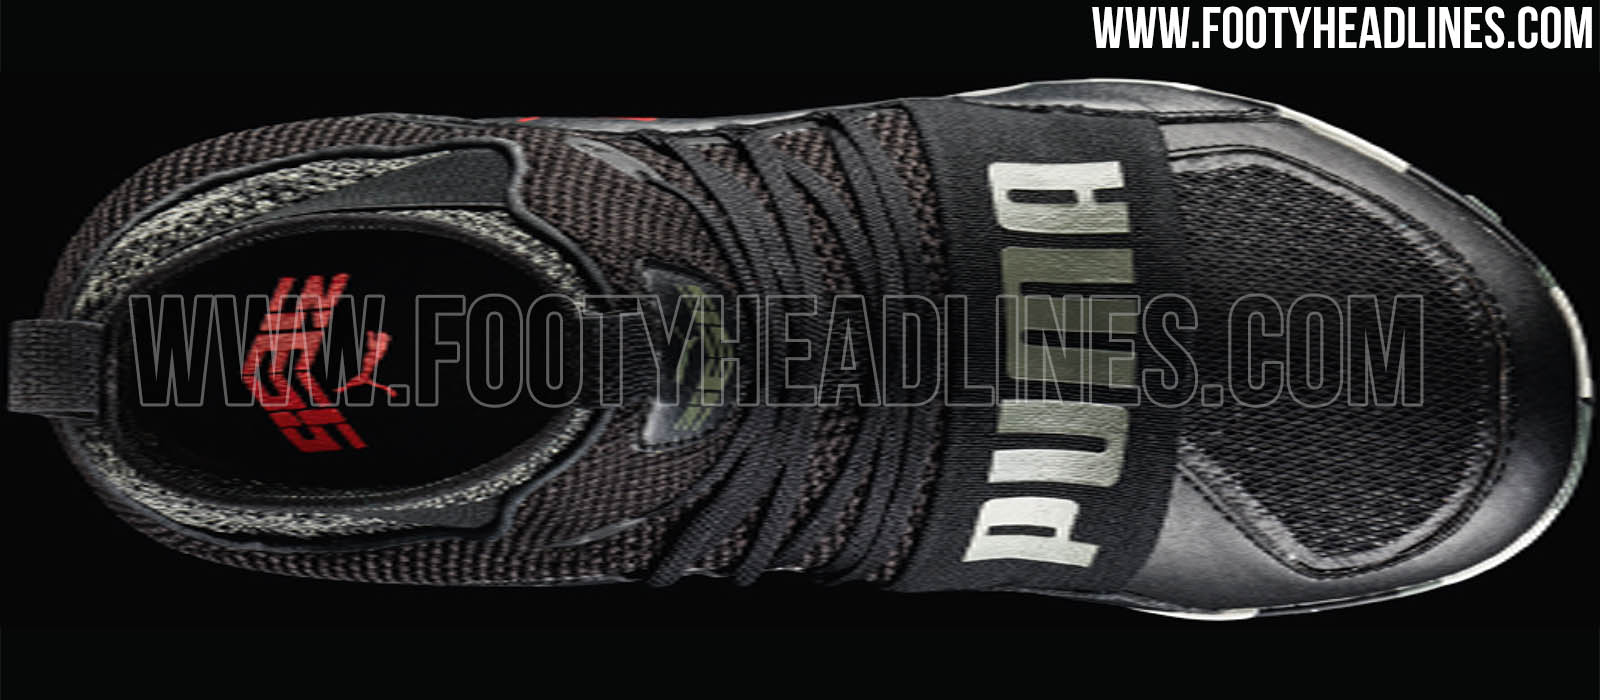 Insane Puma 365.18 High Street Football Boots Launched - Headlines